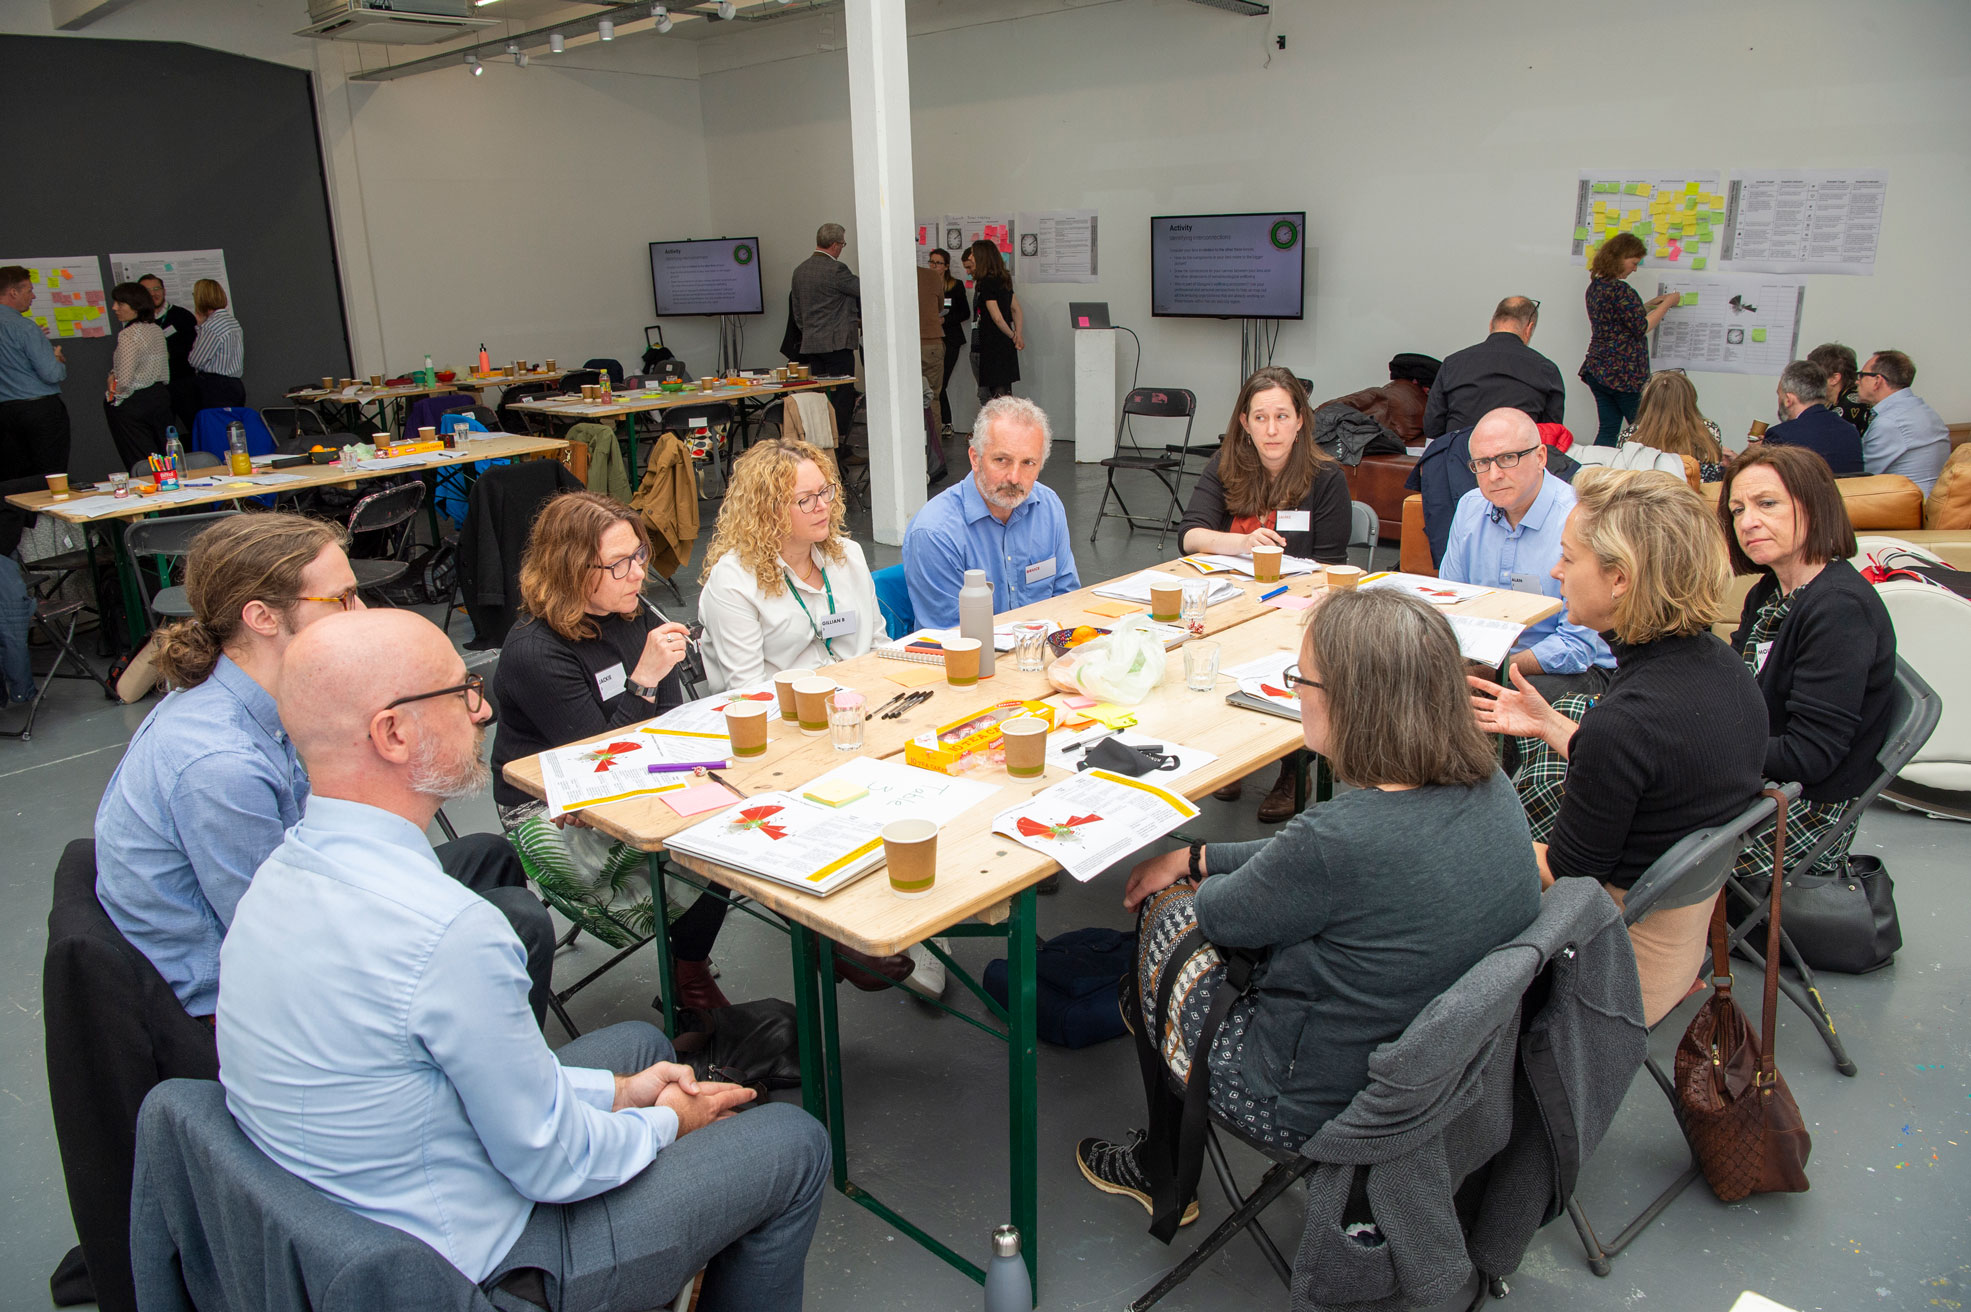 Workshop participants around a table at the Glasgow City Portrait workshop with council staff